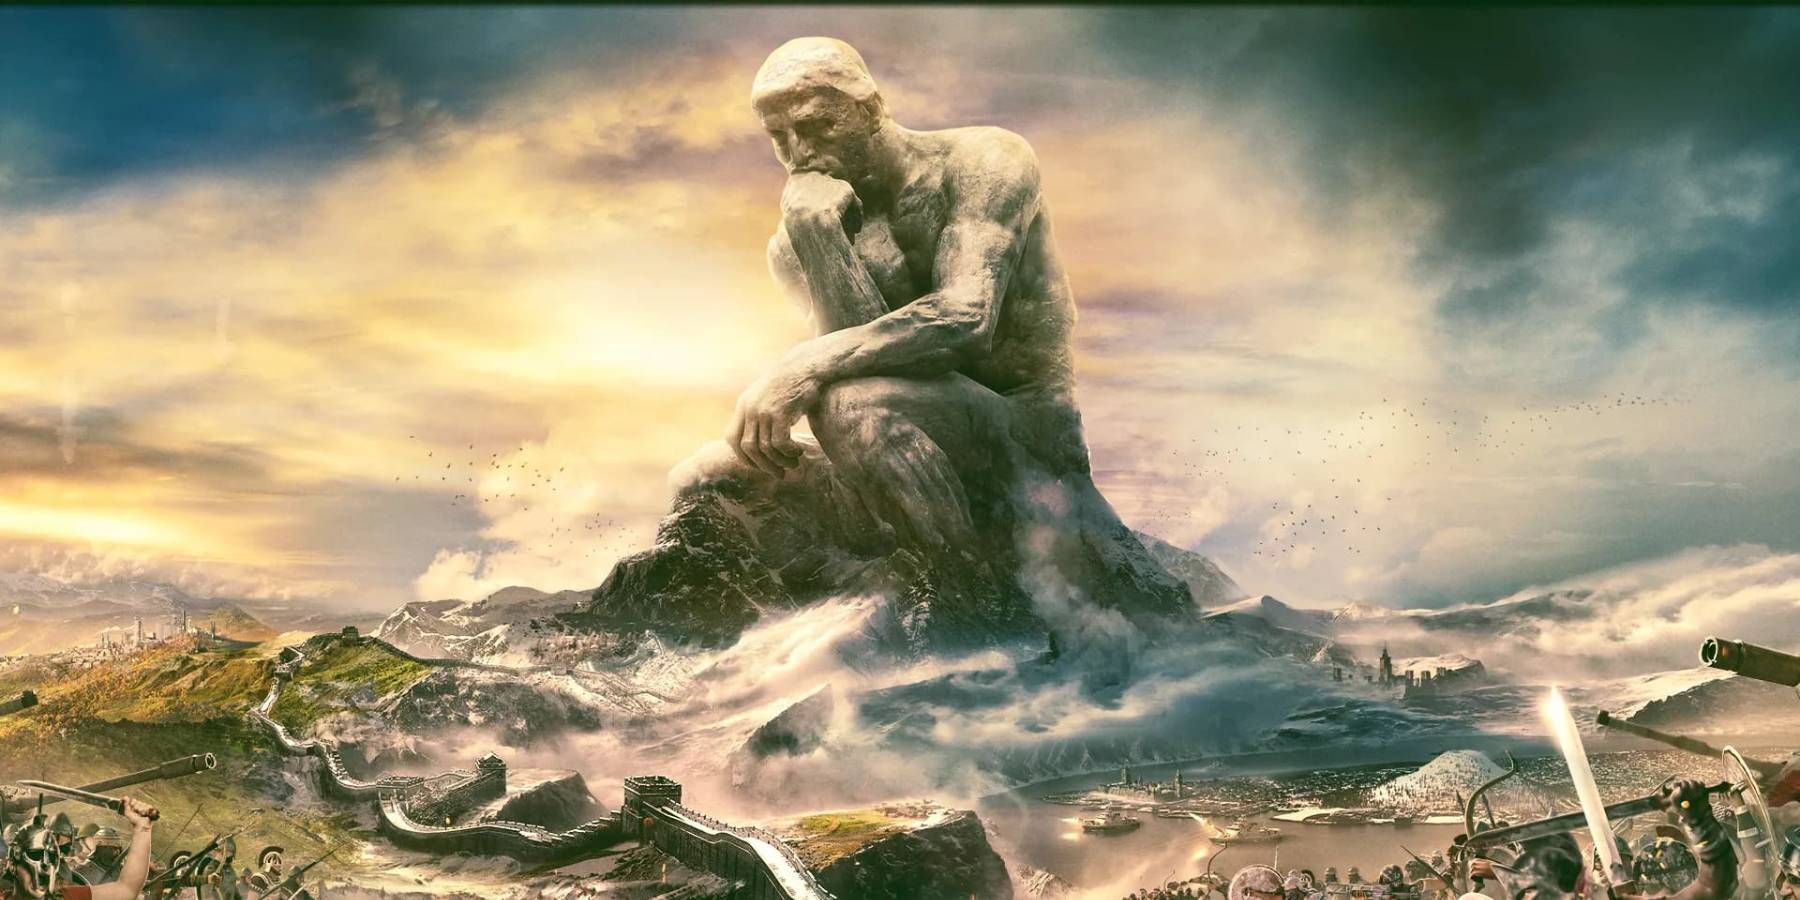 Promo art of a massive Thinker statue from Civilization 6